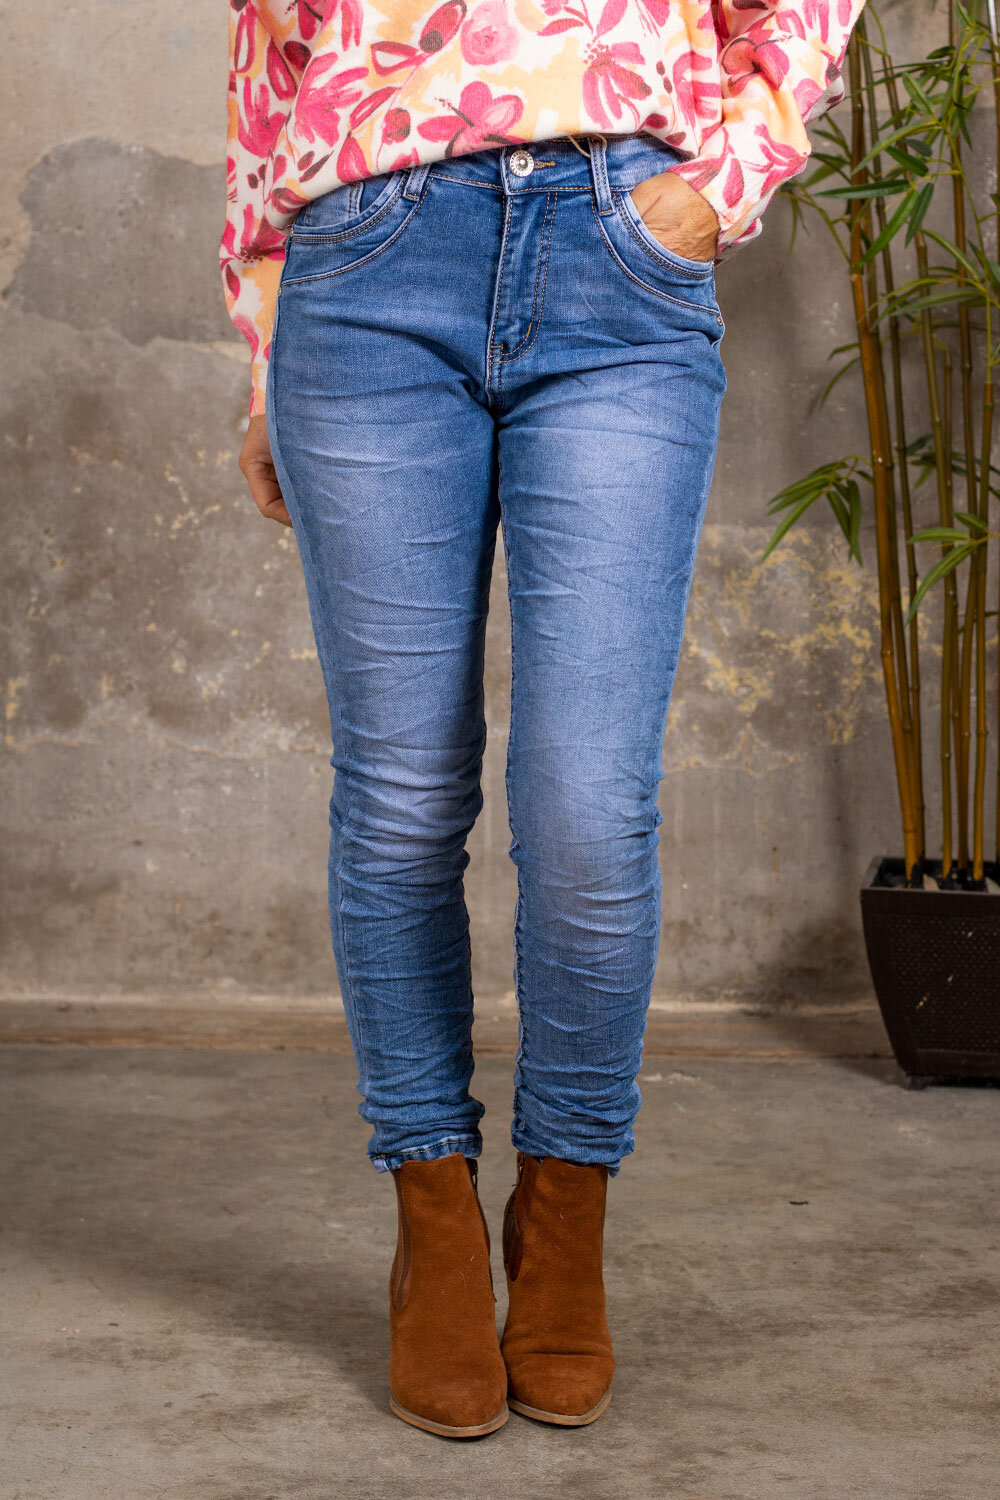 Jeans JW22267 - Denim